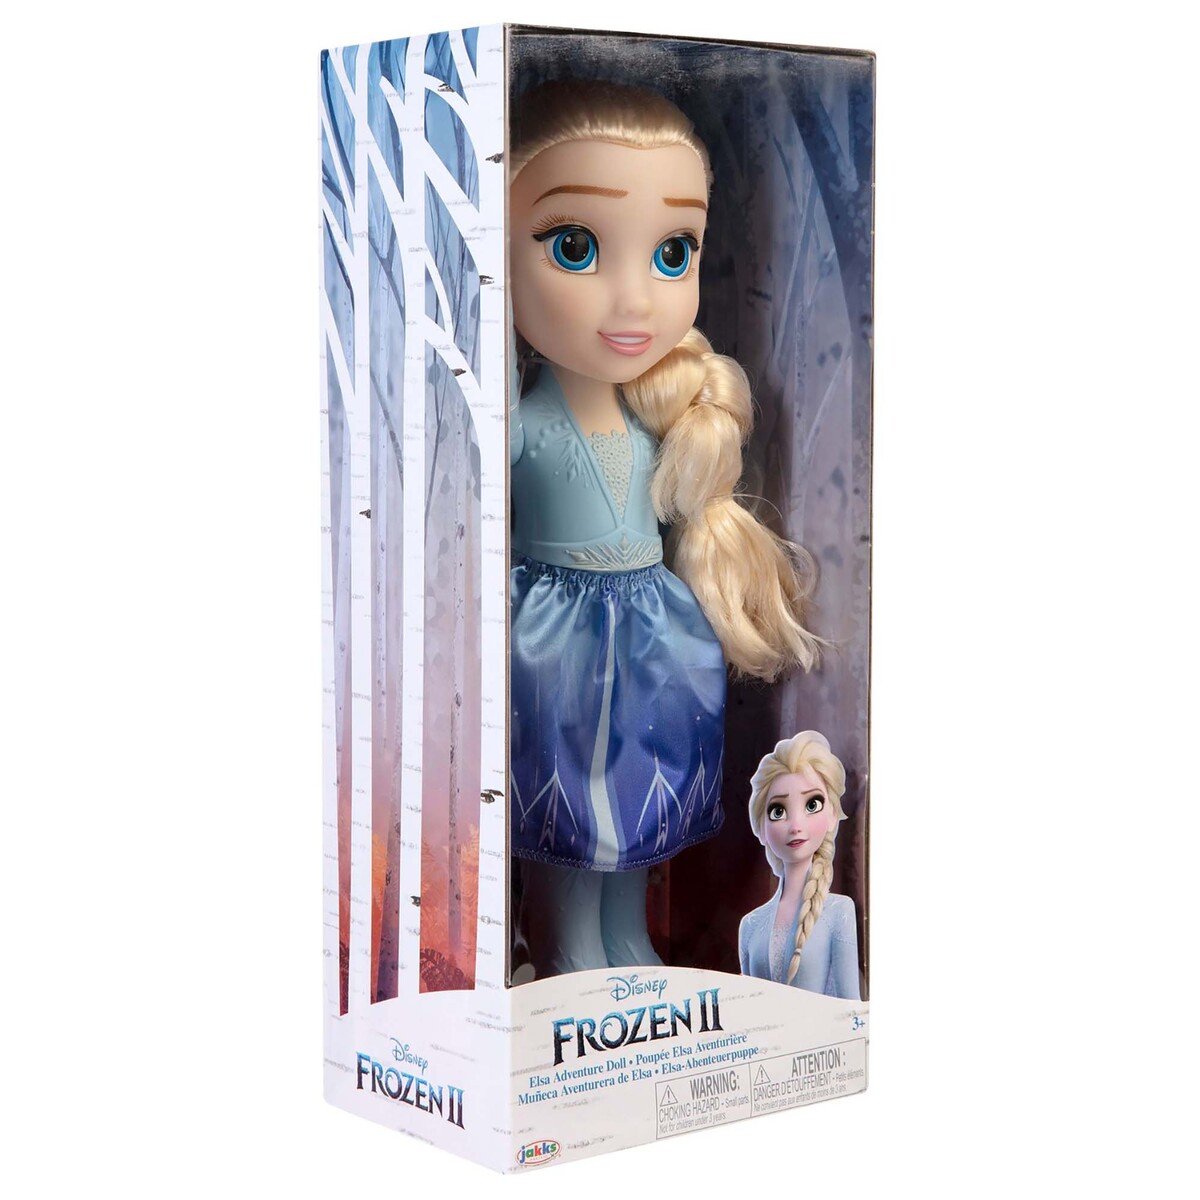 Disney Frozen II Petite Adventure Doll - Assorted 1pc, Anna or Elsa design doll.